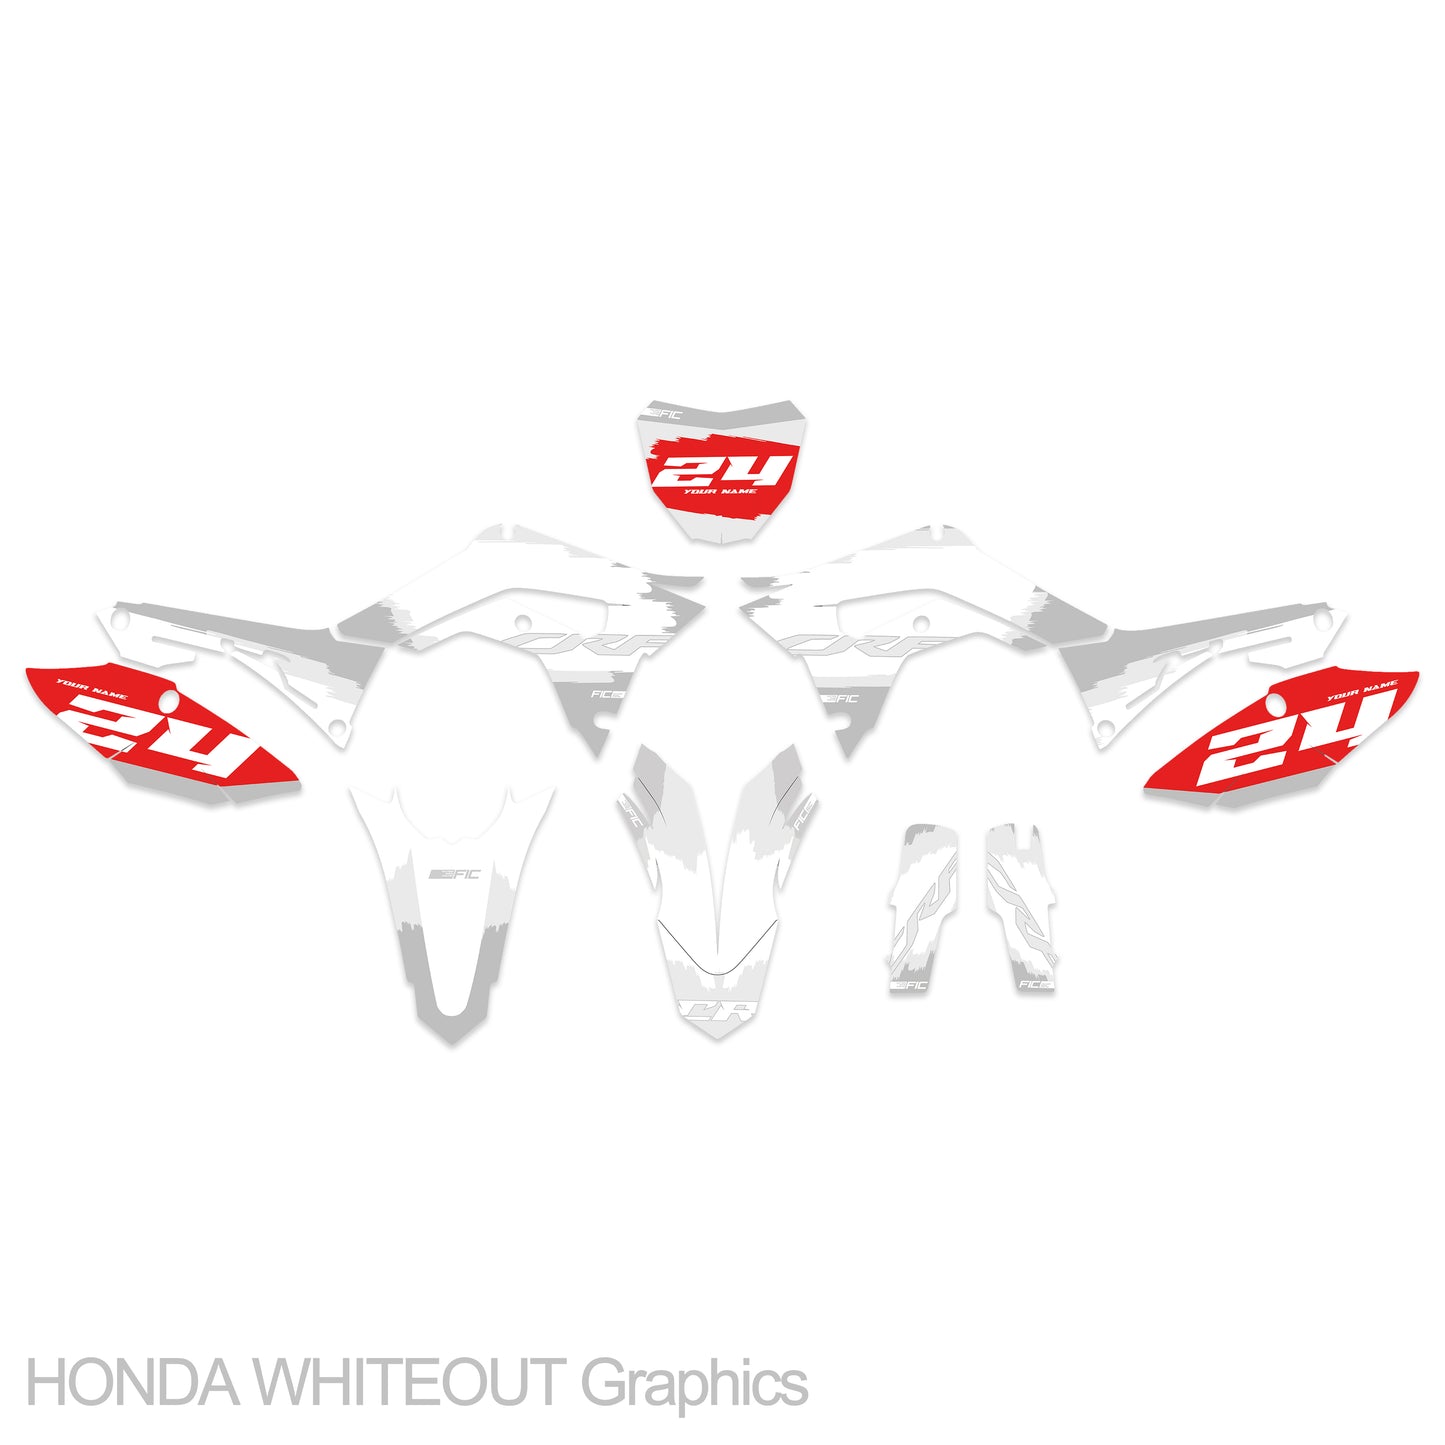 HONDA CRF 450R 2004 WHITEOUT Graphics Kit